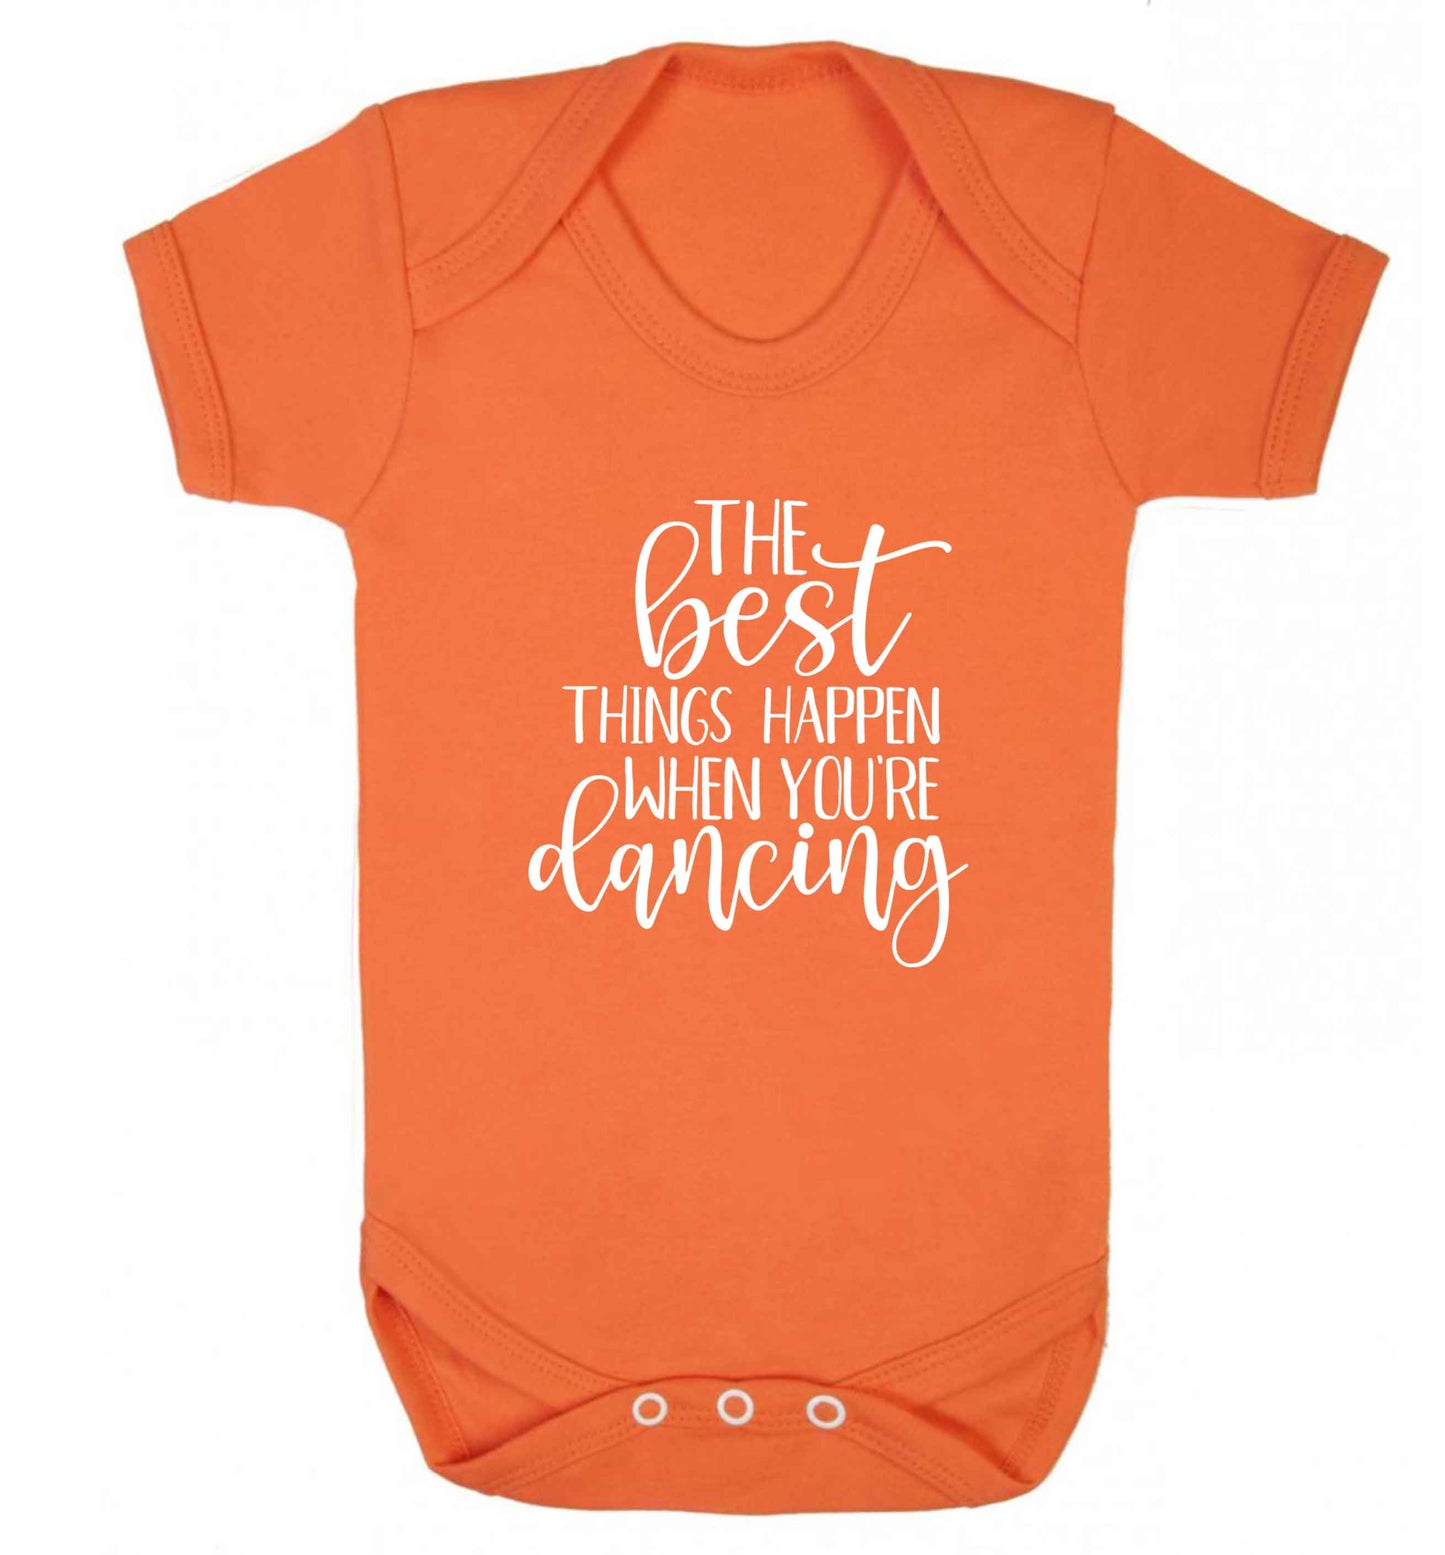 Best Things Happen Dancing baby vest orange 18-24 months